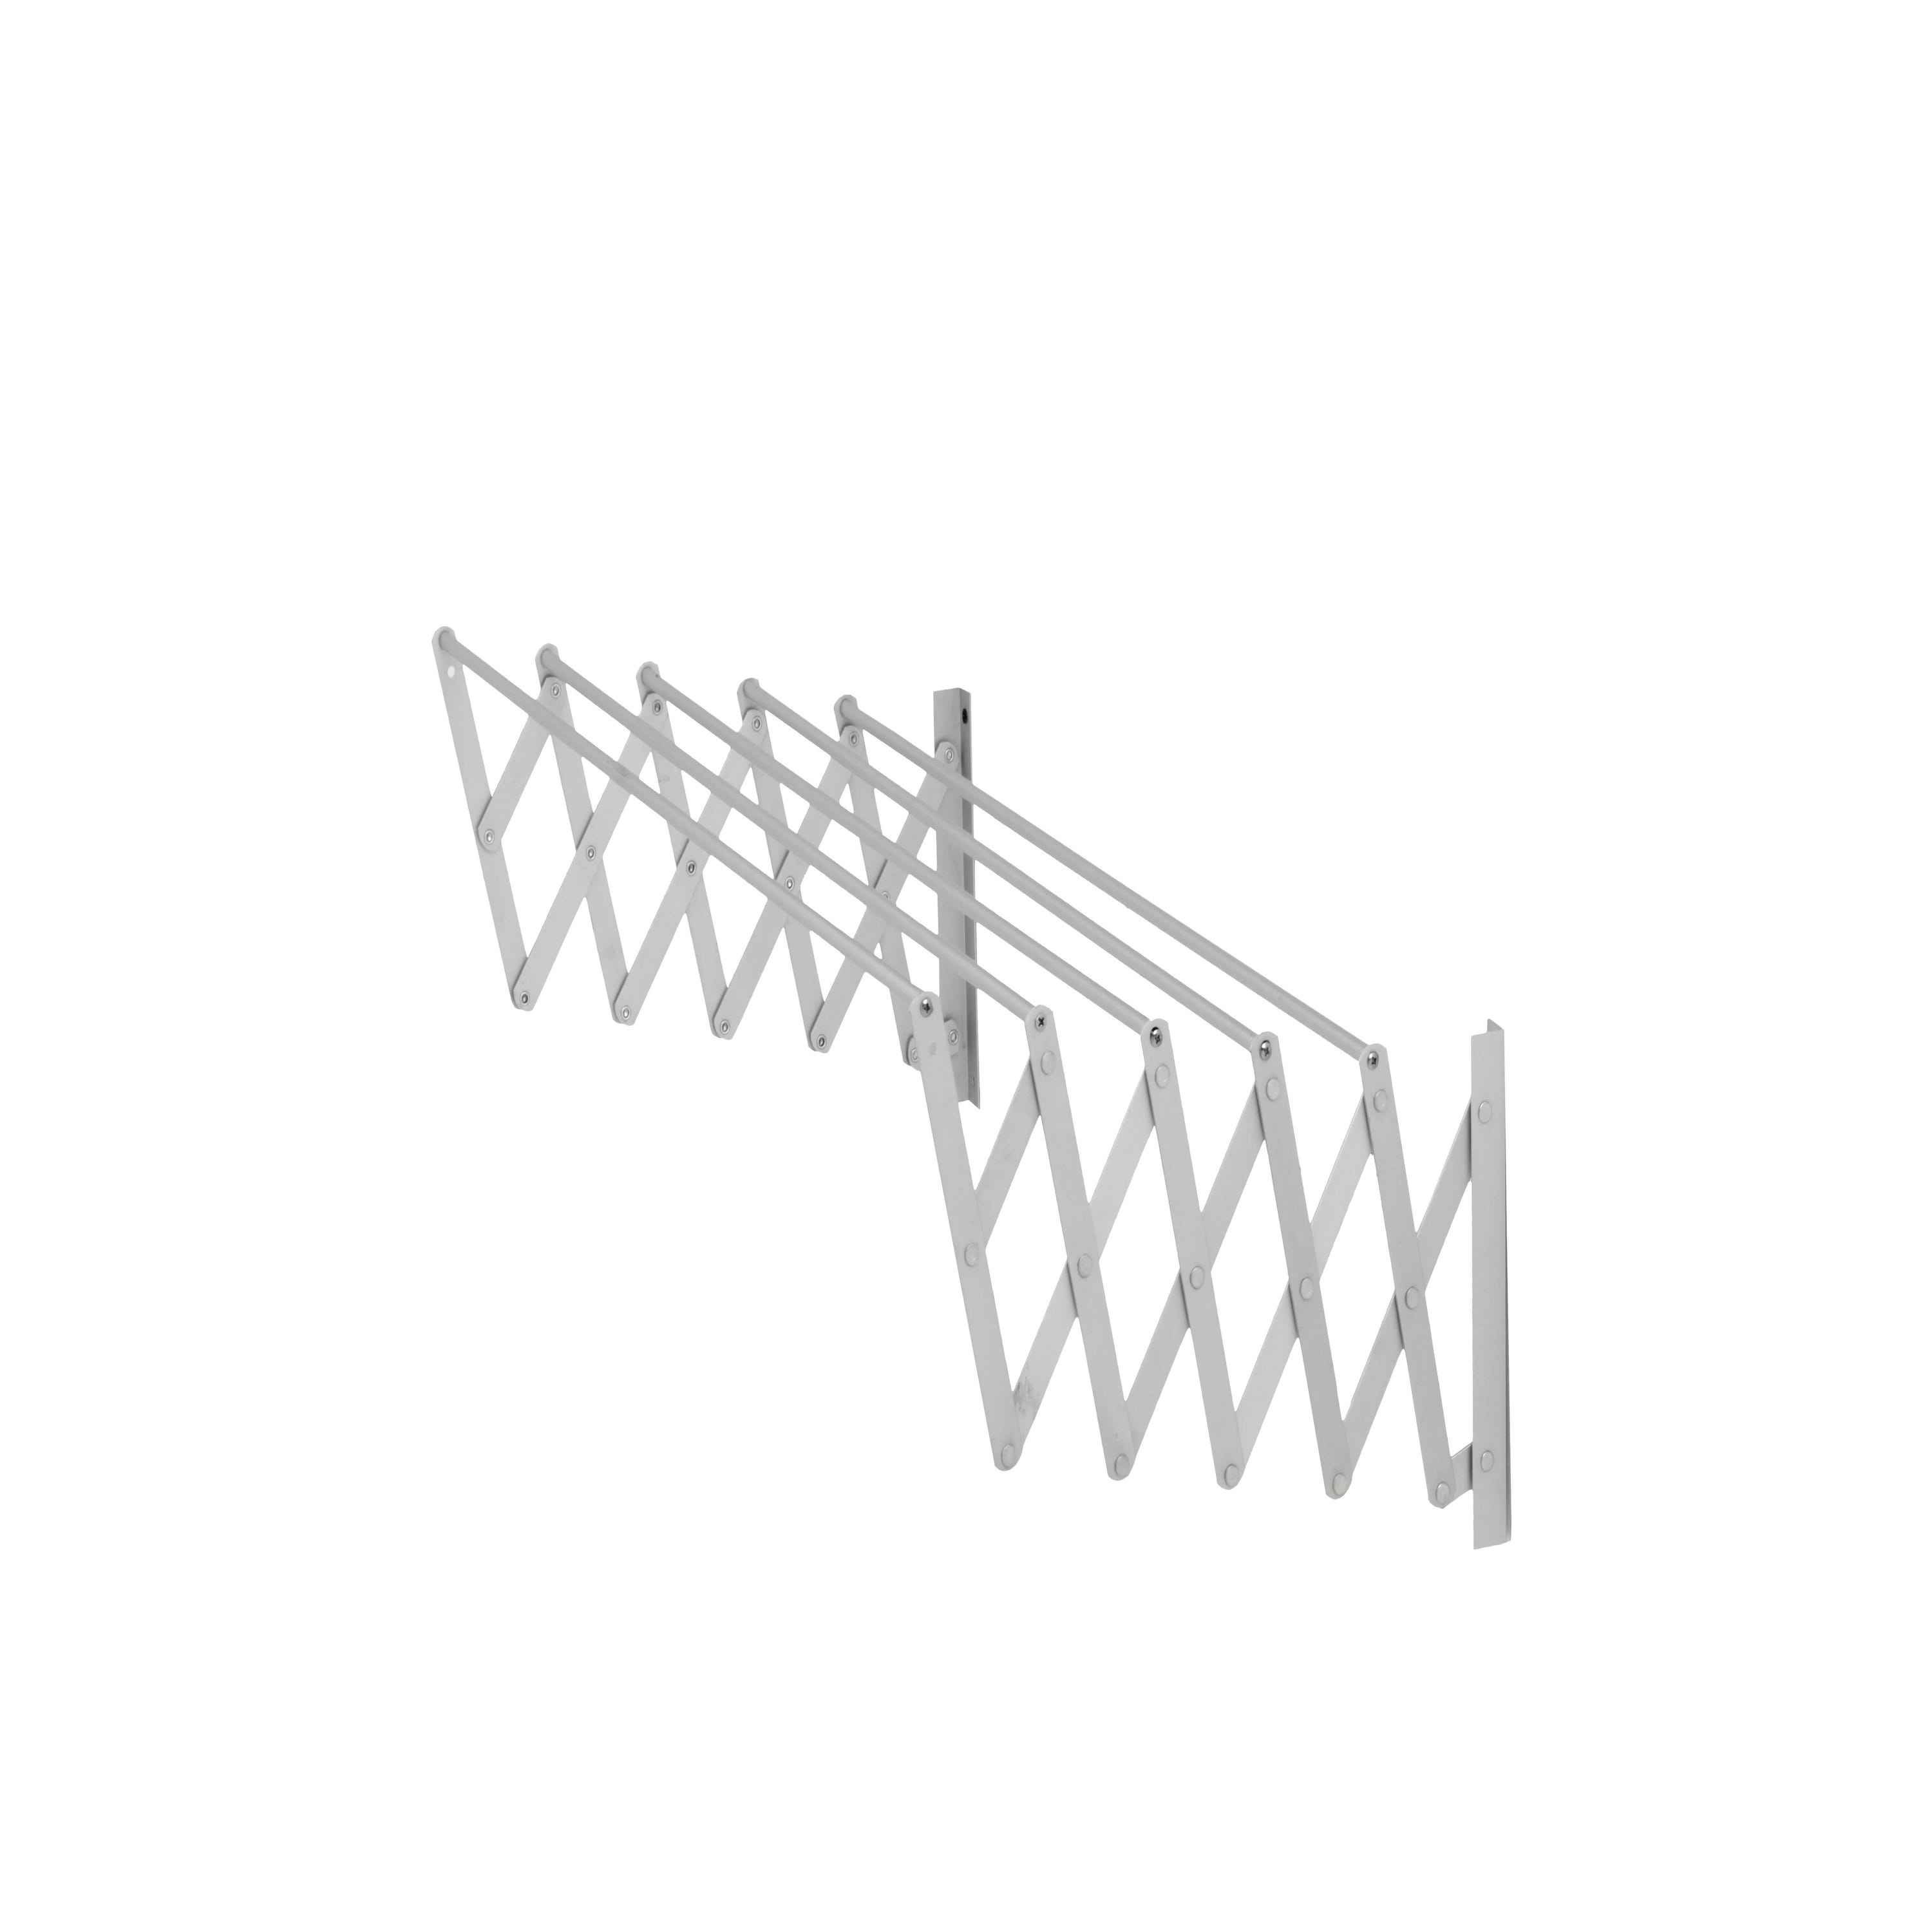 Tendedero de pared extensible (Longitud cuerda de tender: 7 m